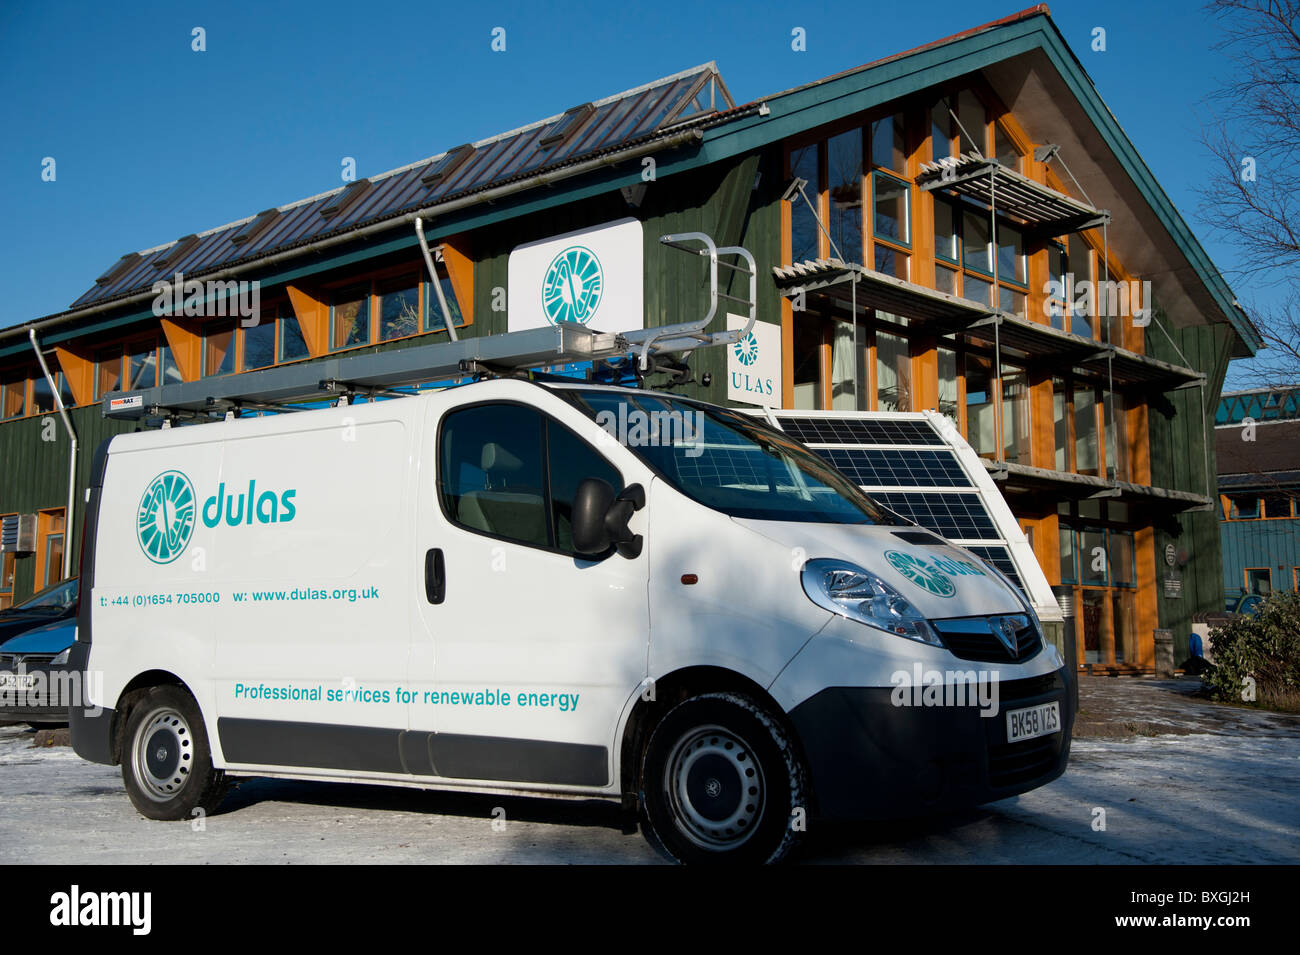 DULAS - servizi professionali per le energie rinnovabili, Machynlleth Wales UK Foto Stock